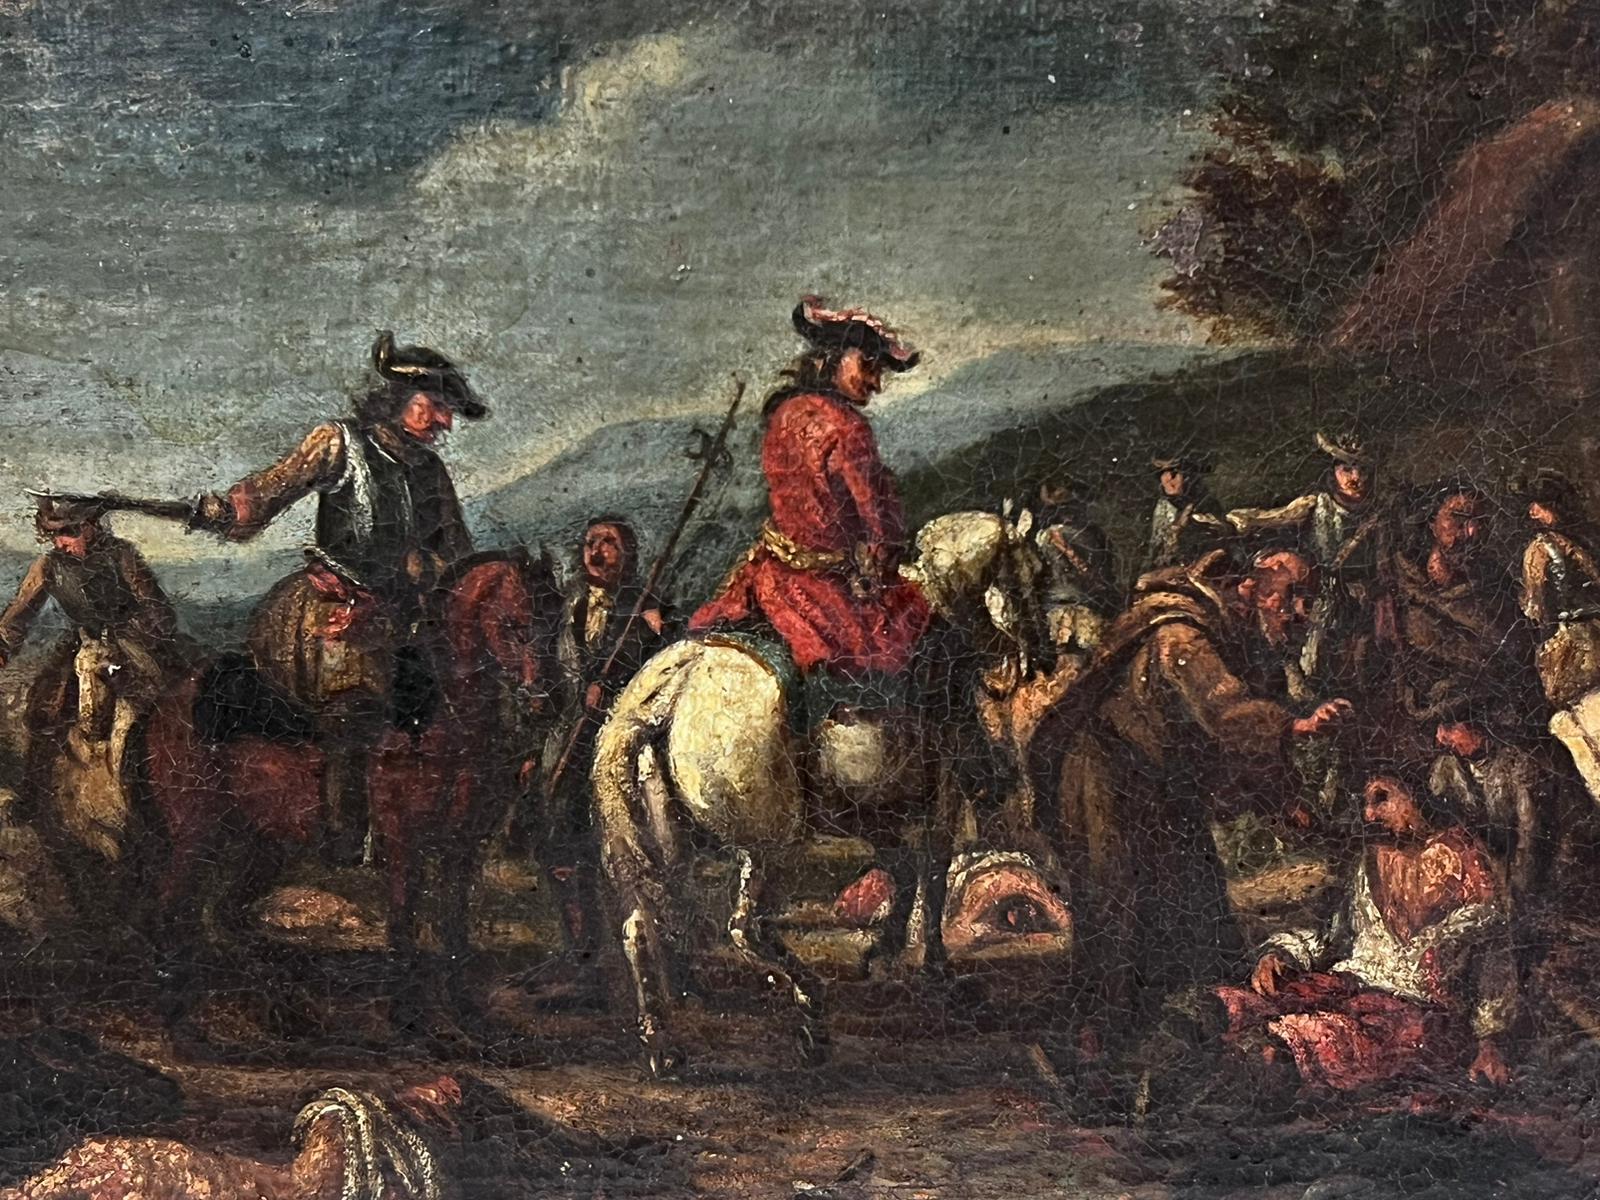 Military Encampment Soldiers on Horseback Dusk Landscape 1700's Oil Painting For Sale 1